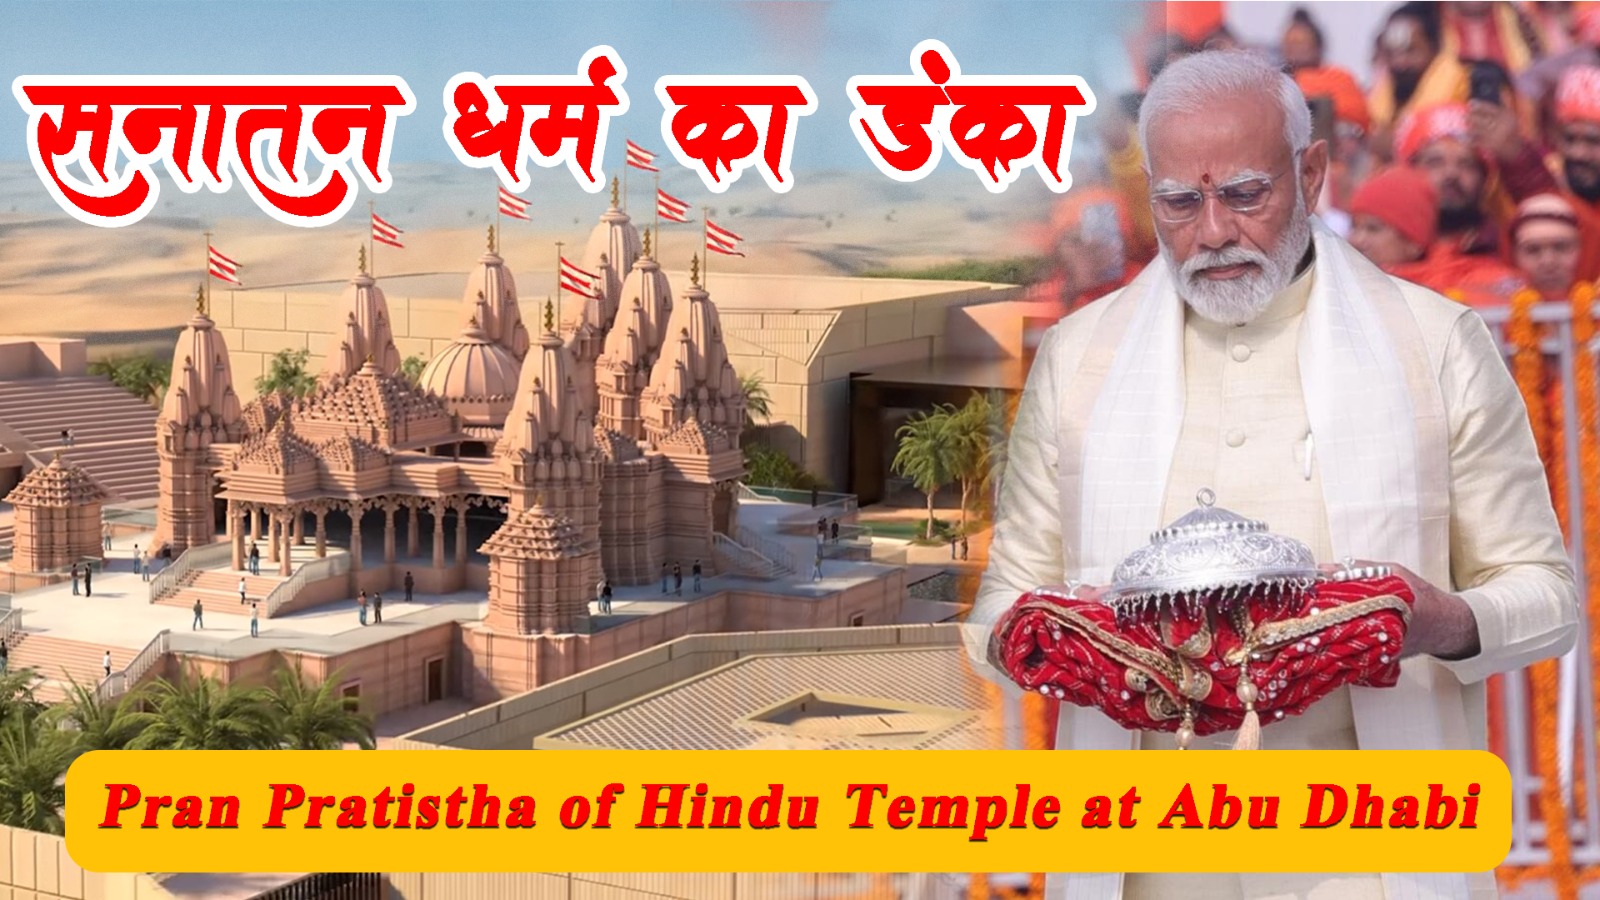 Pran Pratistha of Hindu Temple at Abu Dhabi | Great Post News